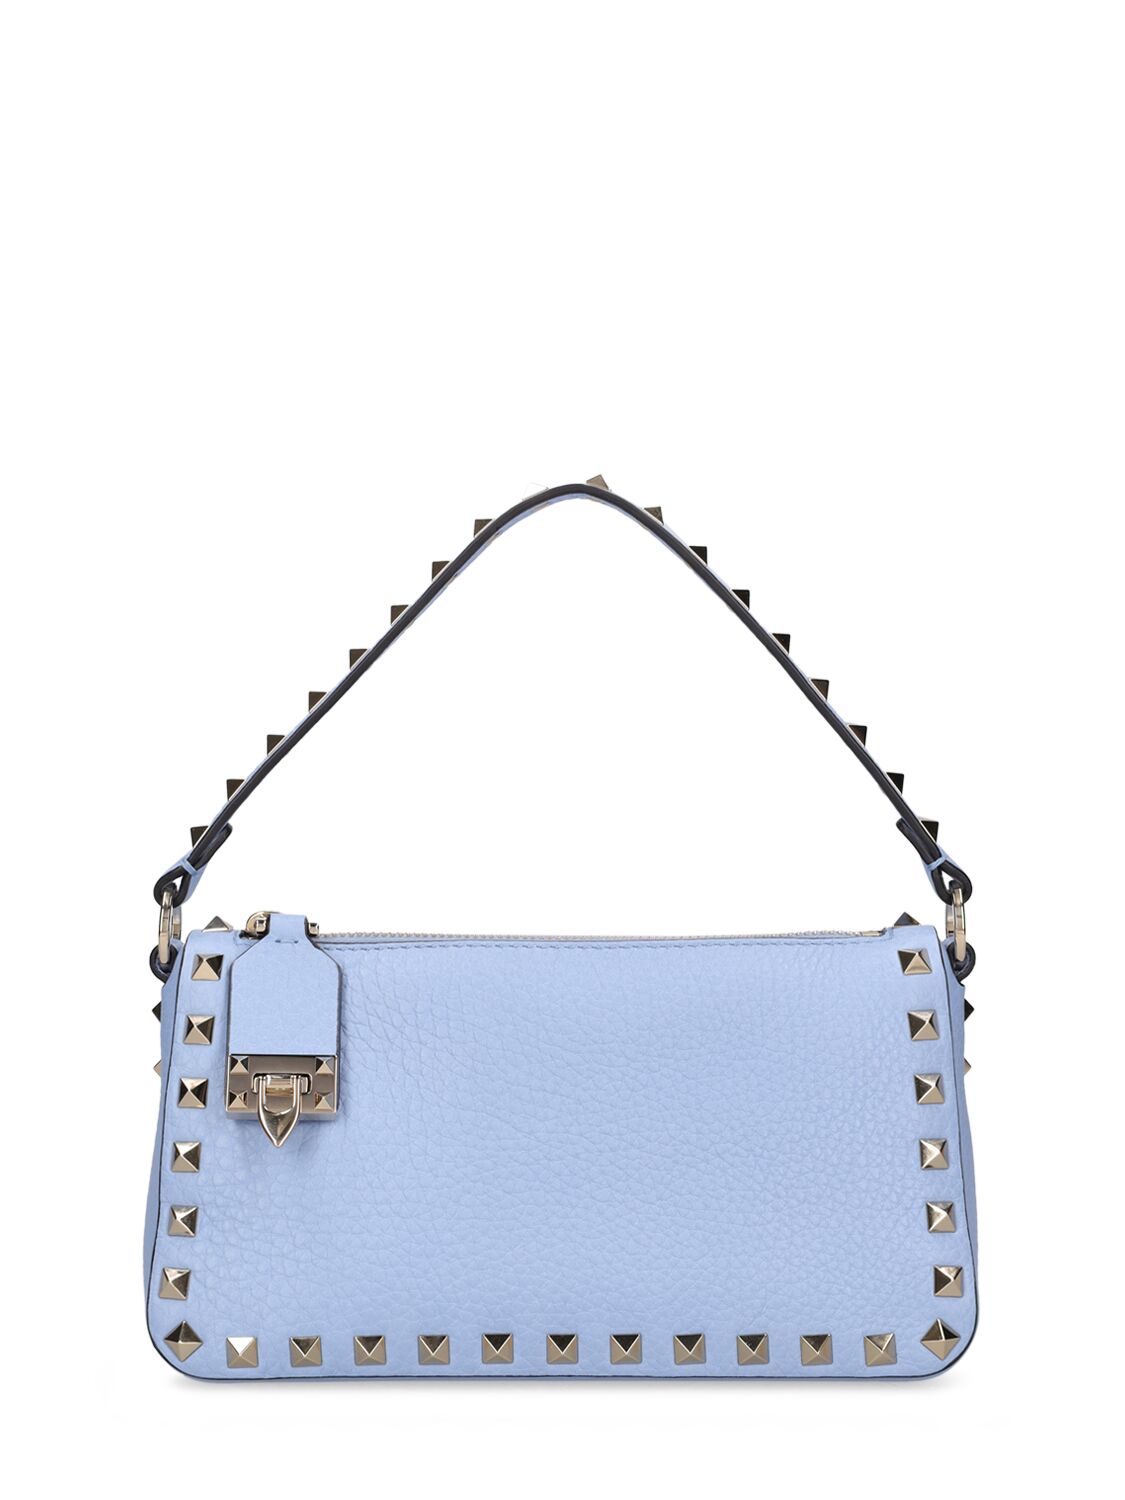 Valentino Garavani Rockstud Small Leather Shoulder Bag In Blue